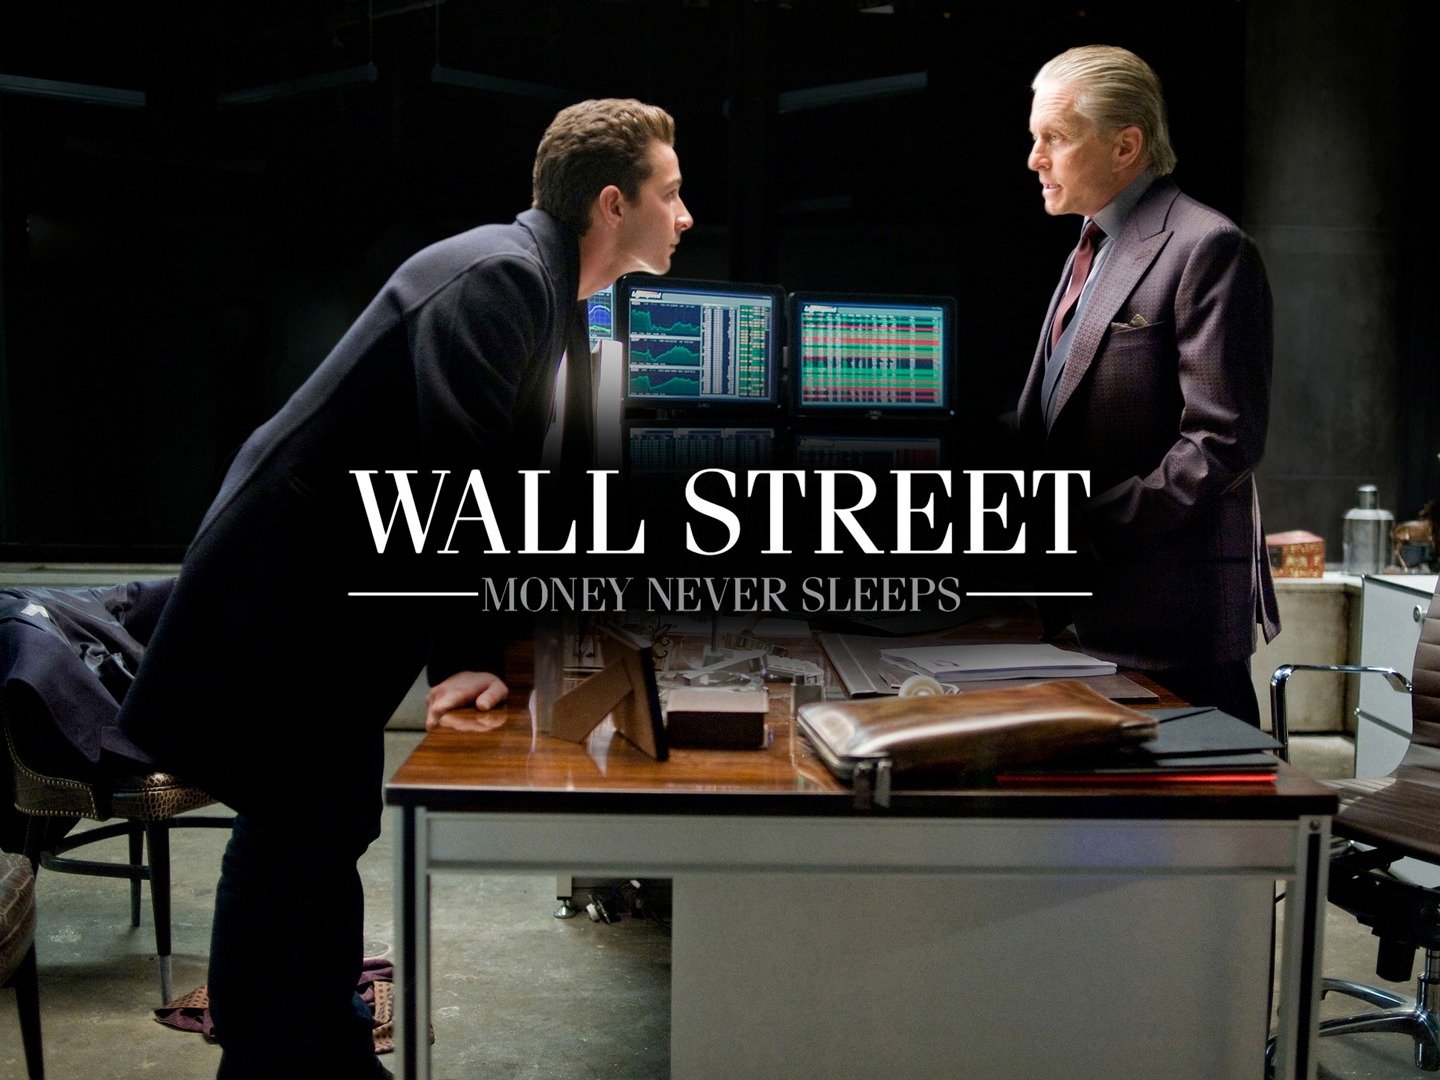 "Wall Street: Money Never Sleeps photo 16"